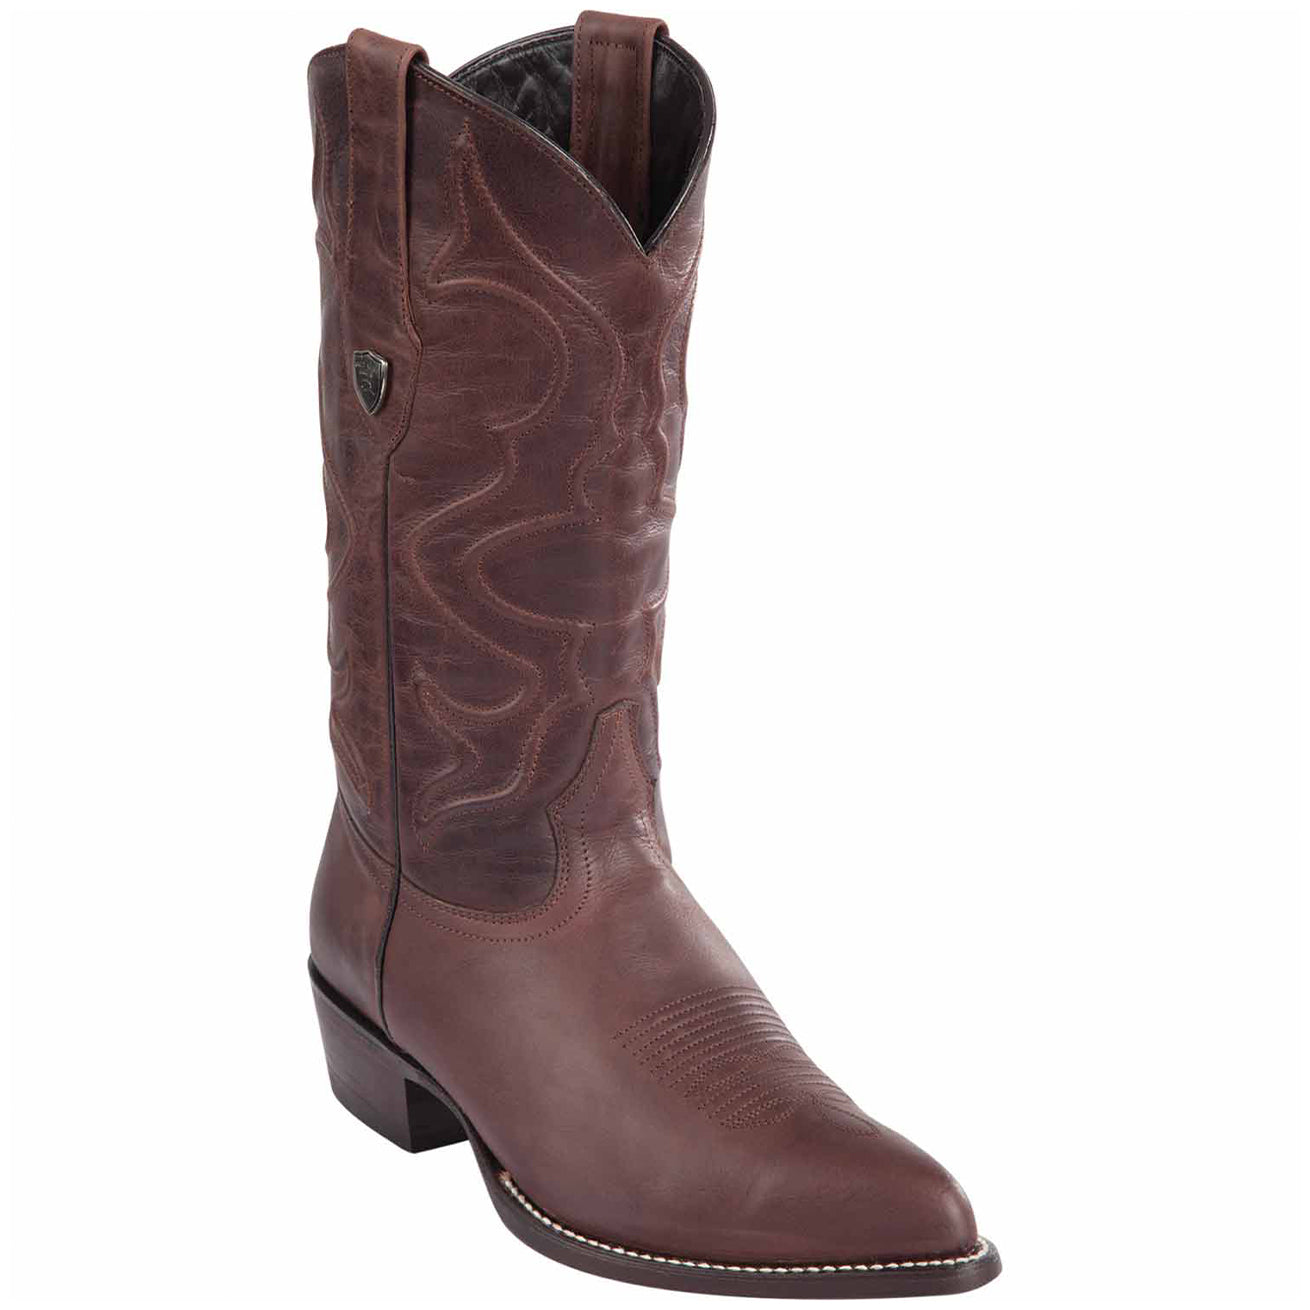 Wild West Boots - Desert Brown Cowboy Boots J-Toe